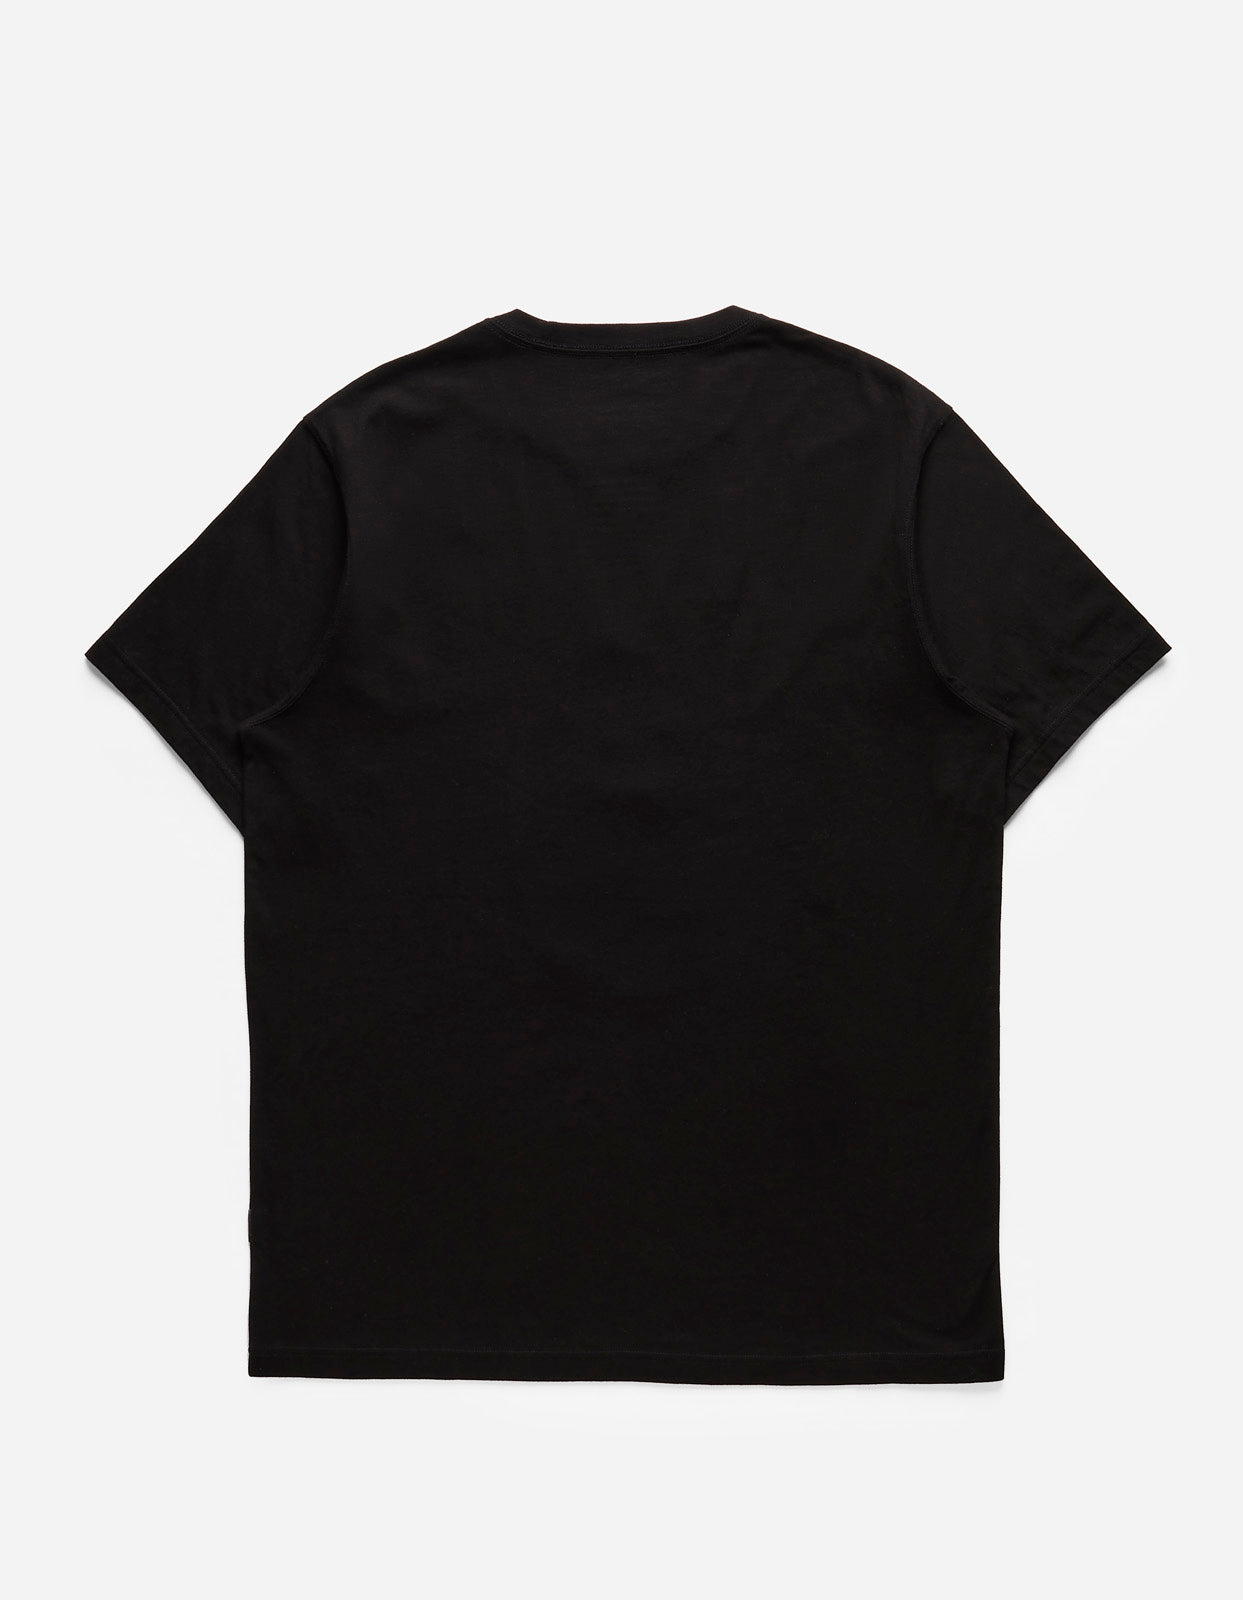 5017 Descending Dragon T-Shirt Black